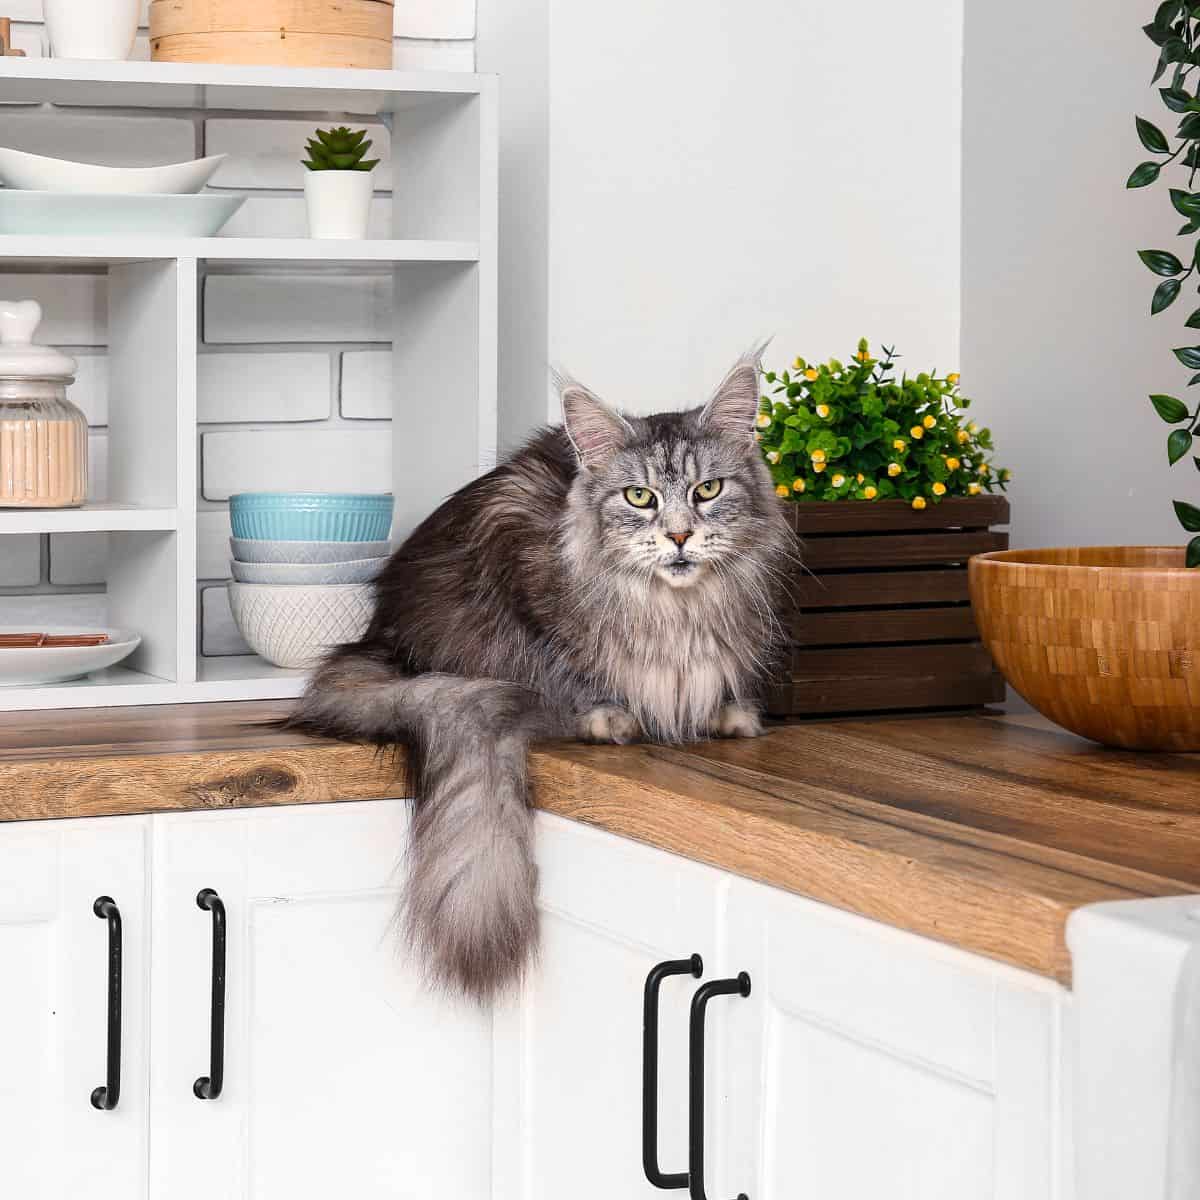 cat sitting on kitchen table